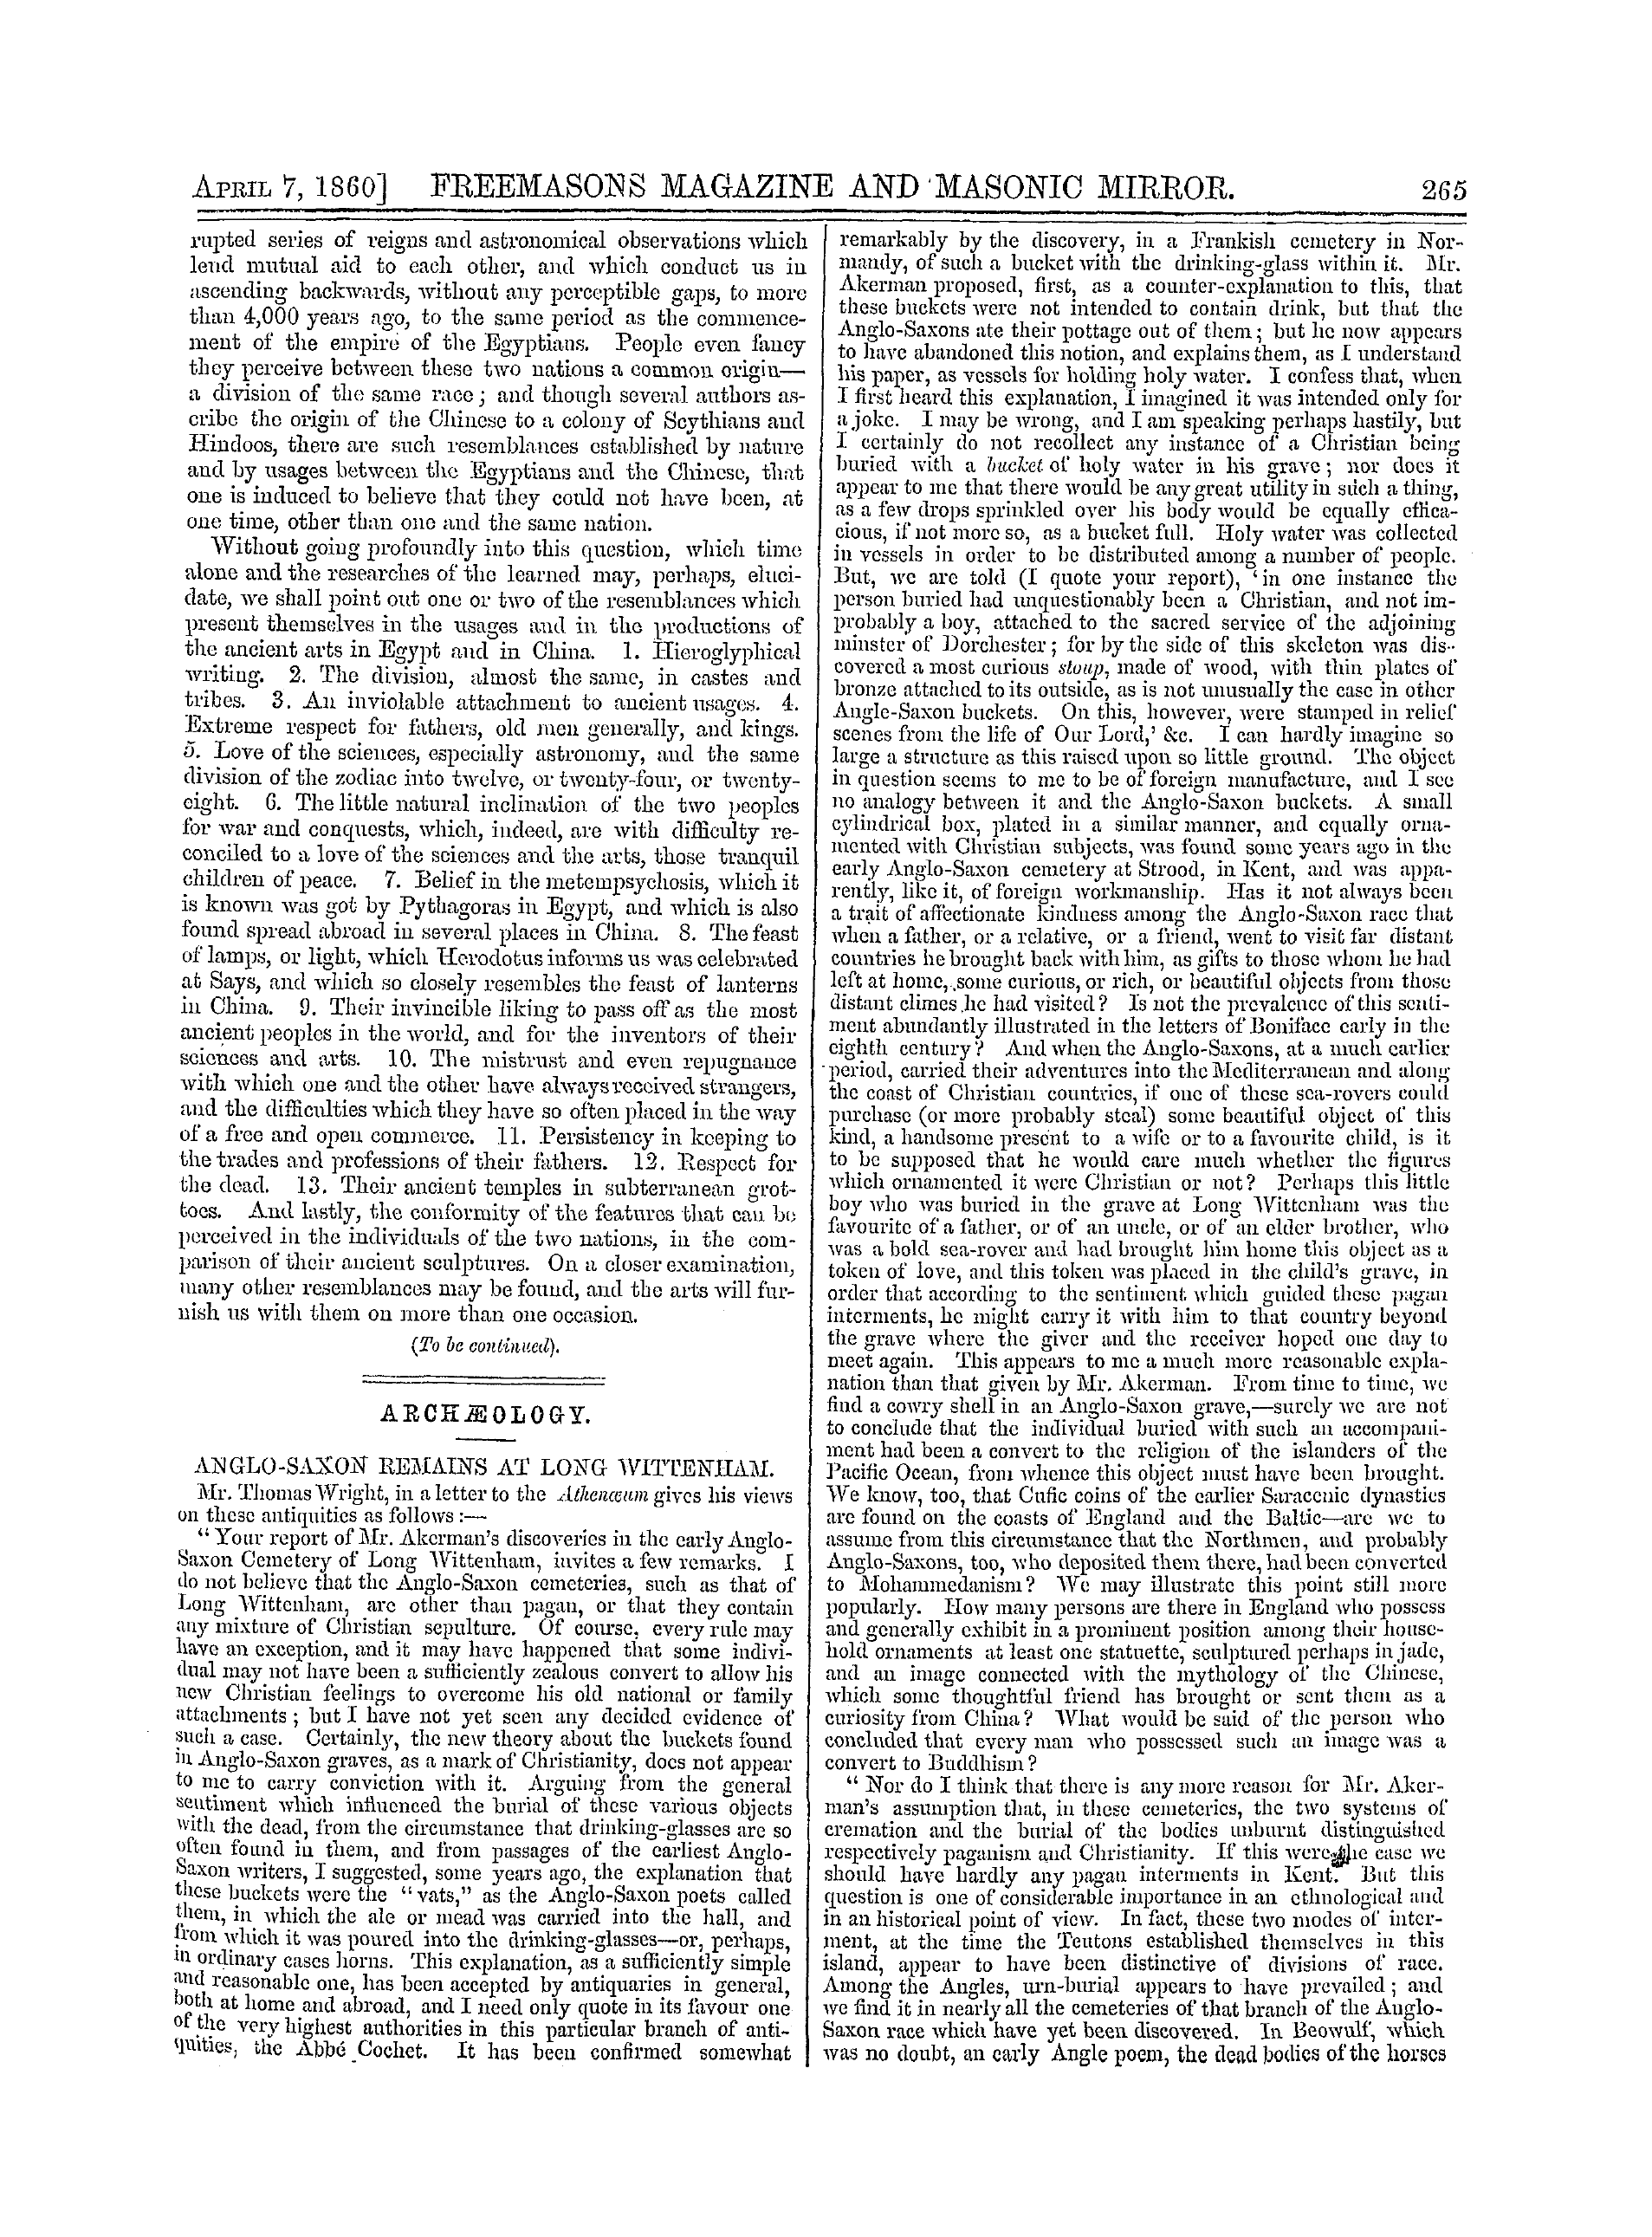 The Freemasons' Monthly Magazine: 1860-04-07 - Archæology.